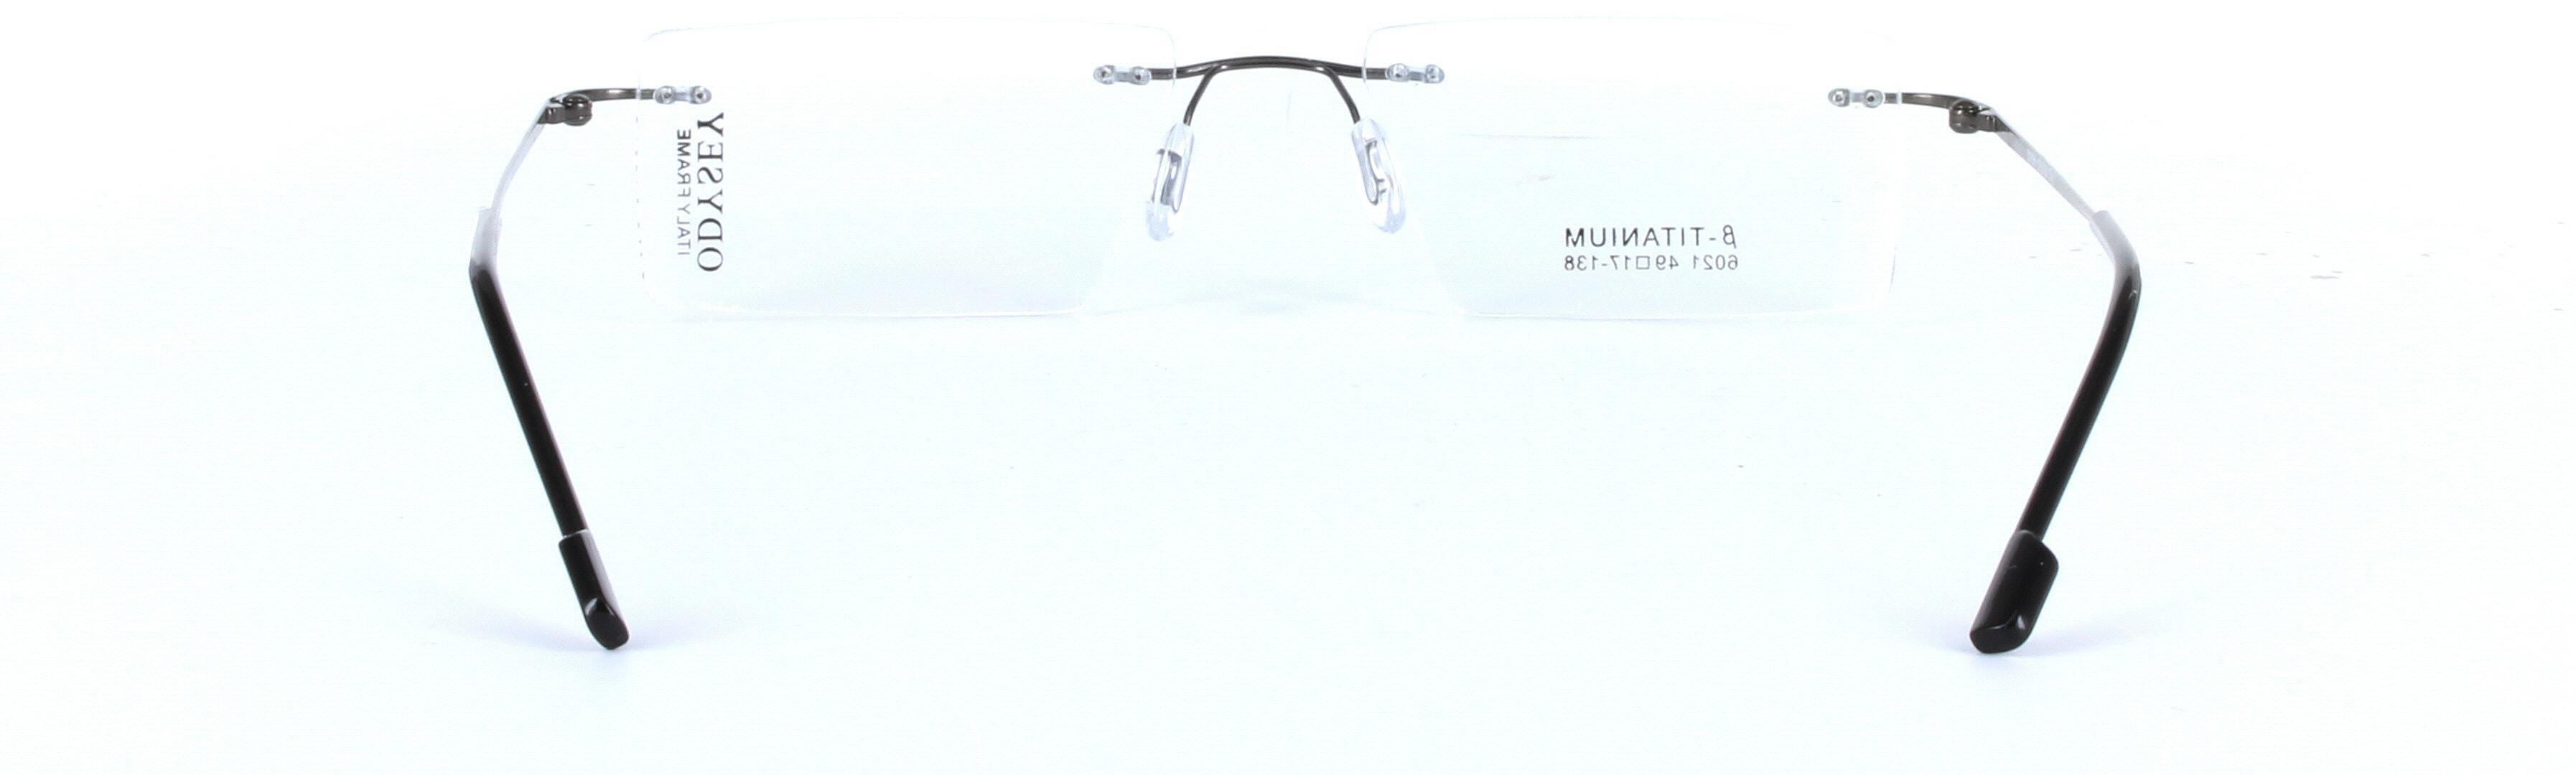 ODYSEY 6021 Gunmetal Rimless Rectangular Titanium Glasses - Image View 3